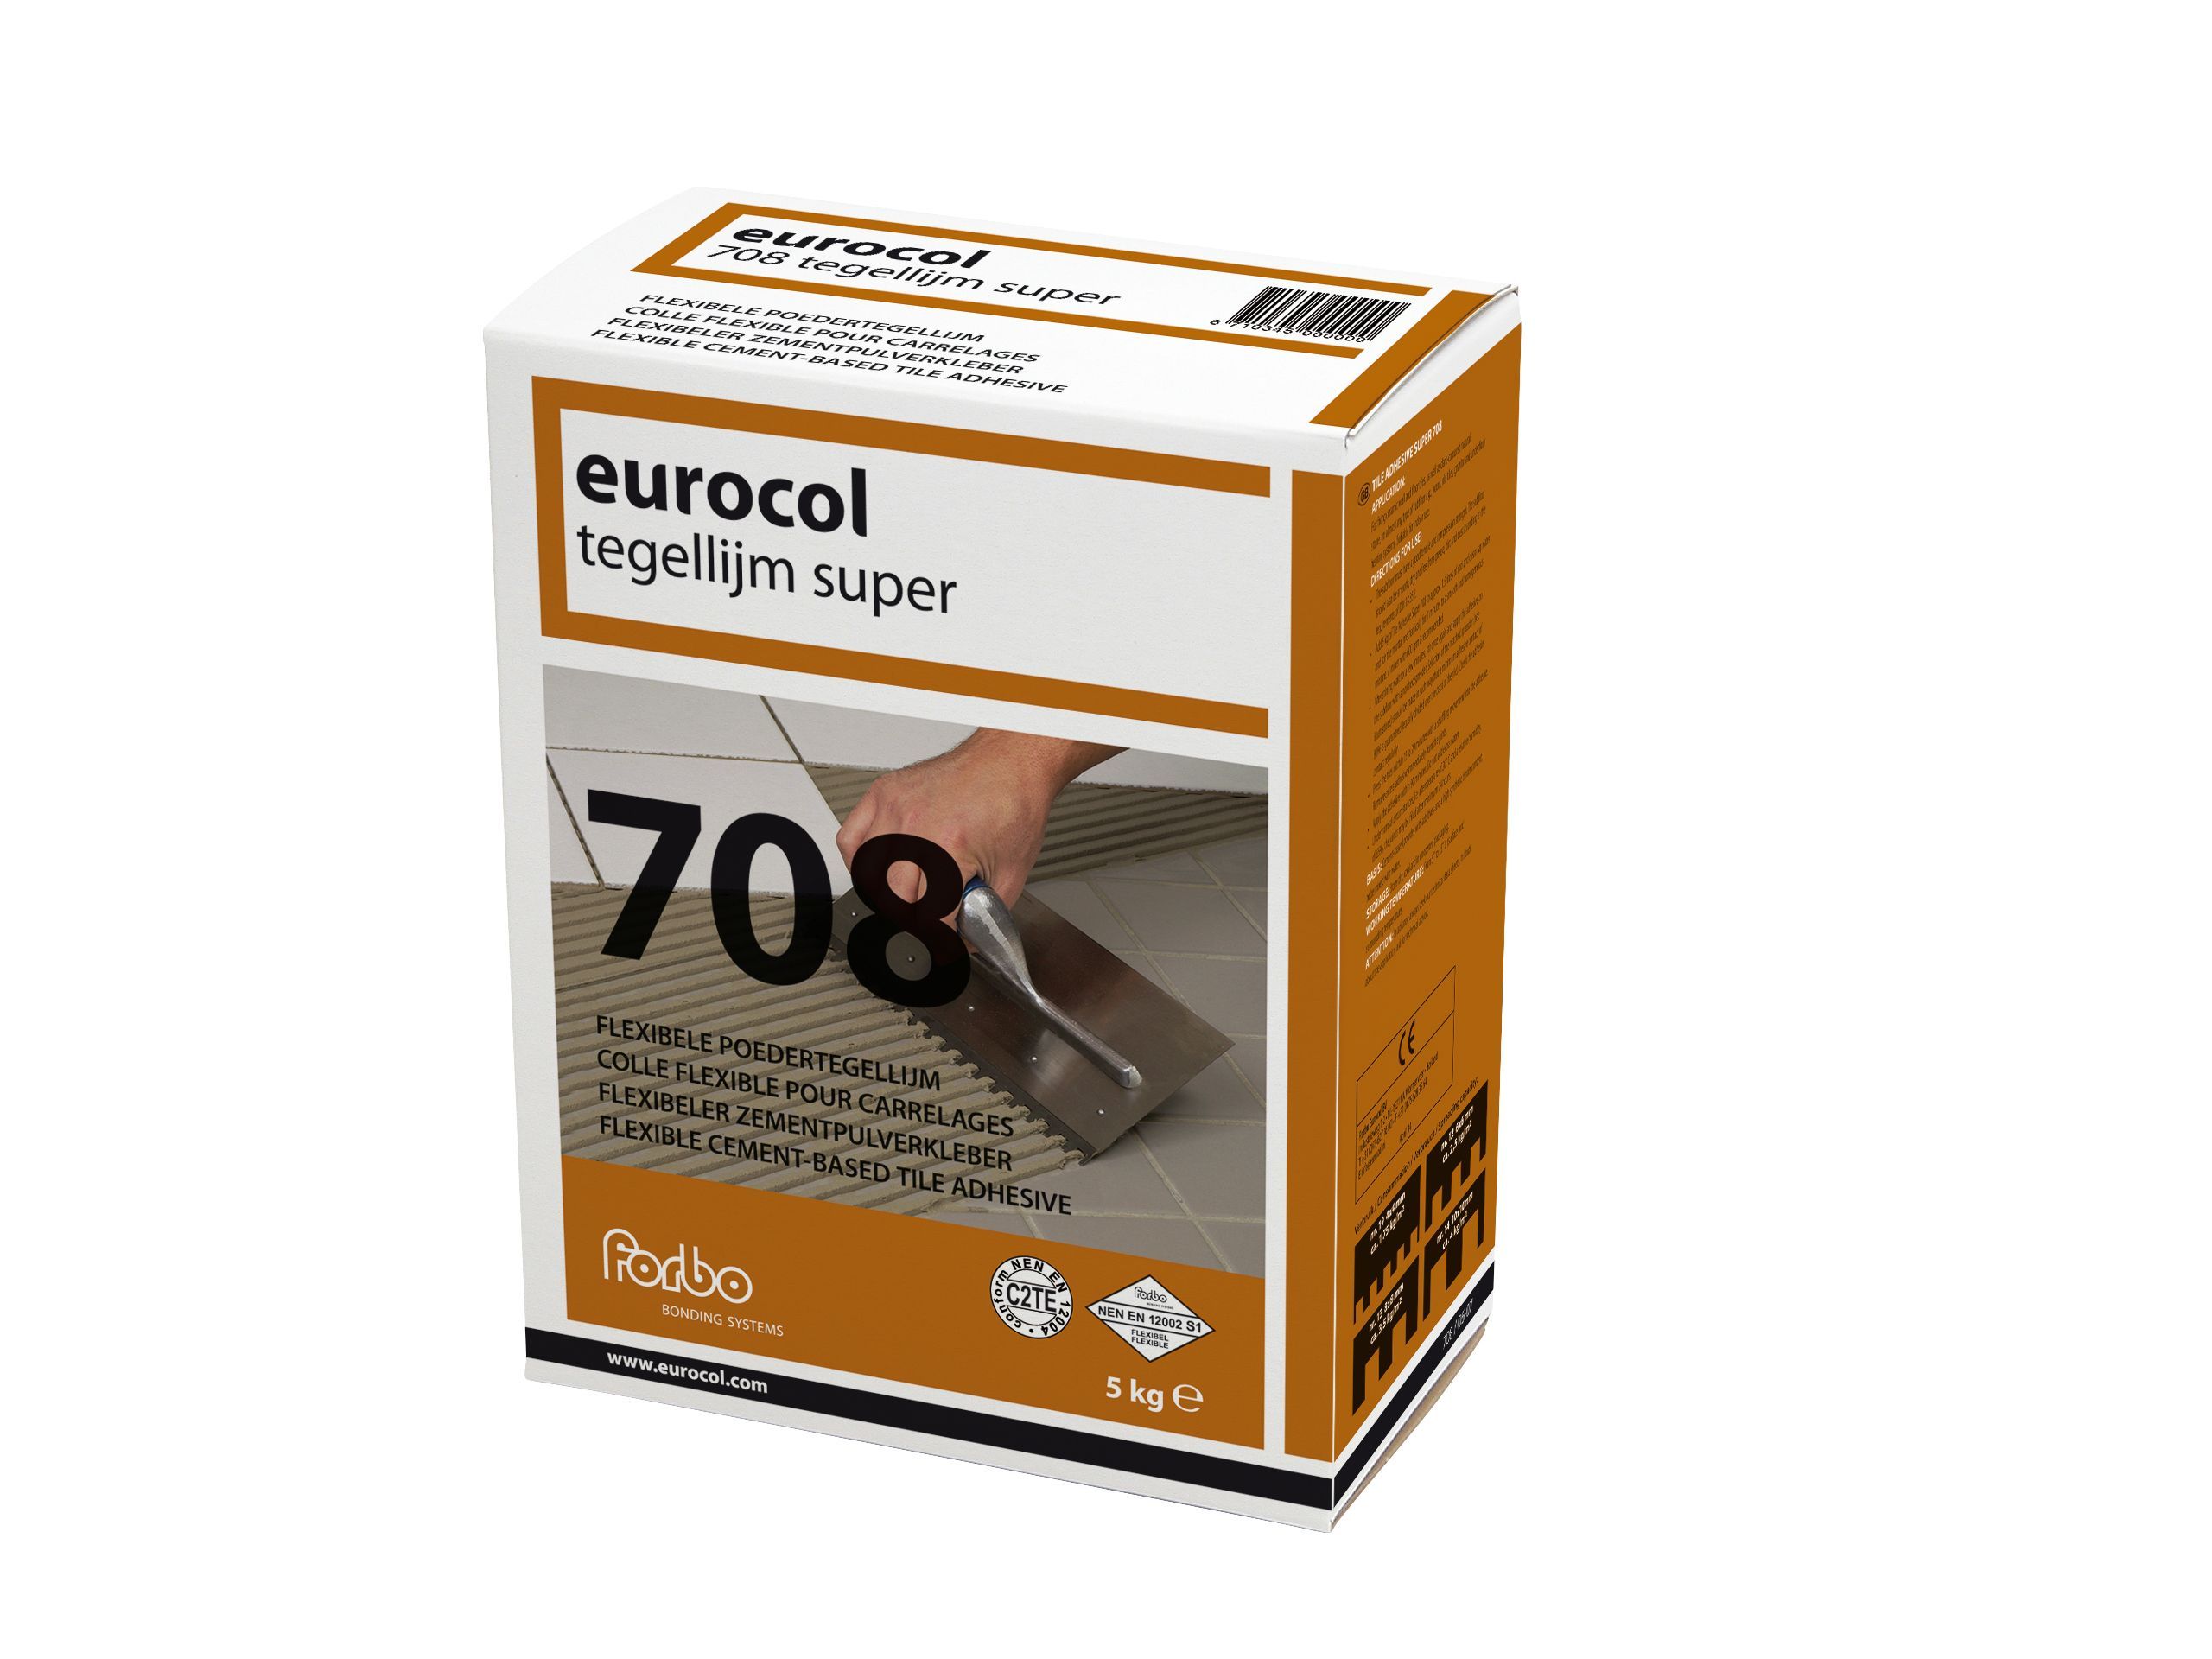 Eurocol 708 Tegellijm Super pak 5 kg